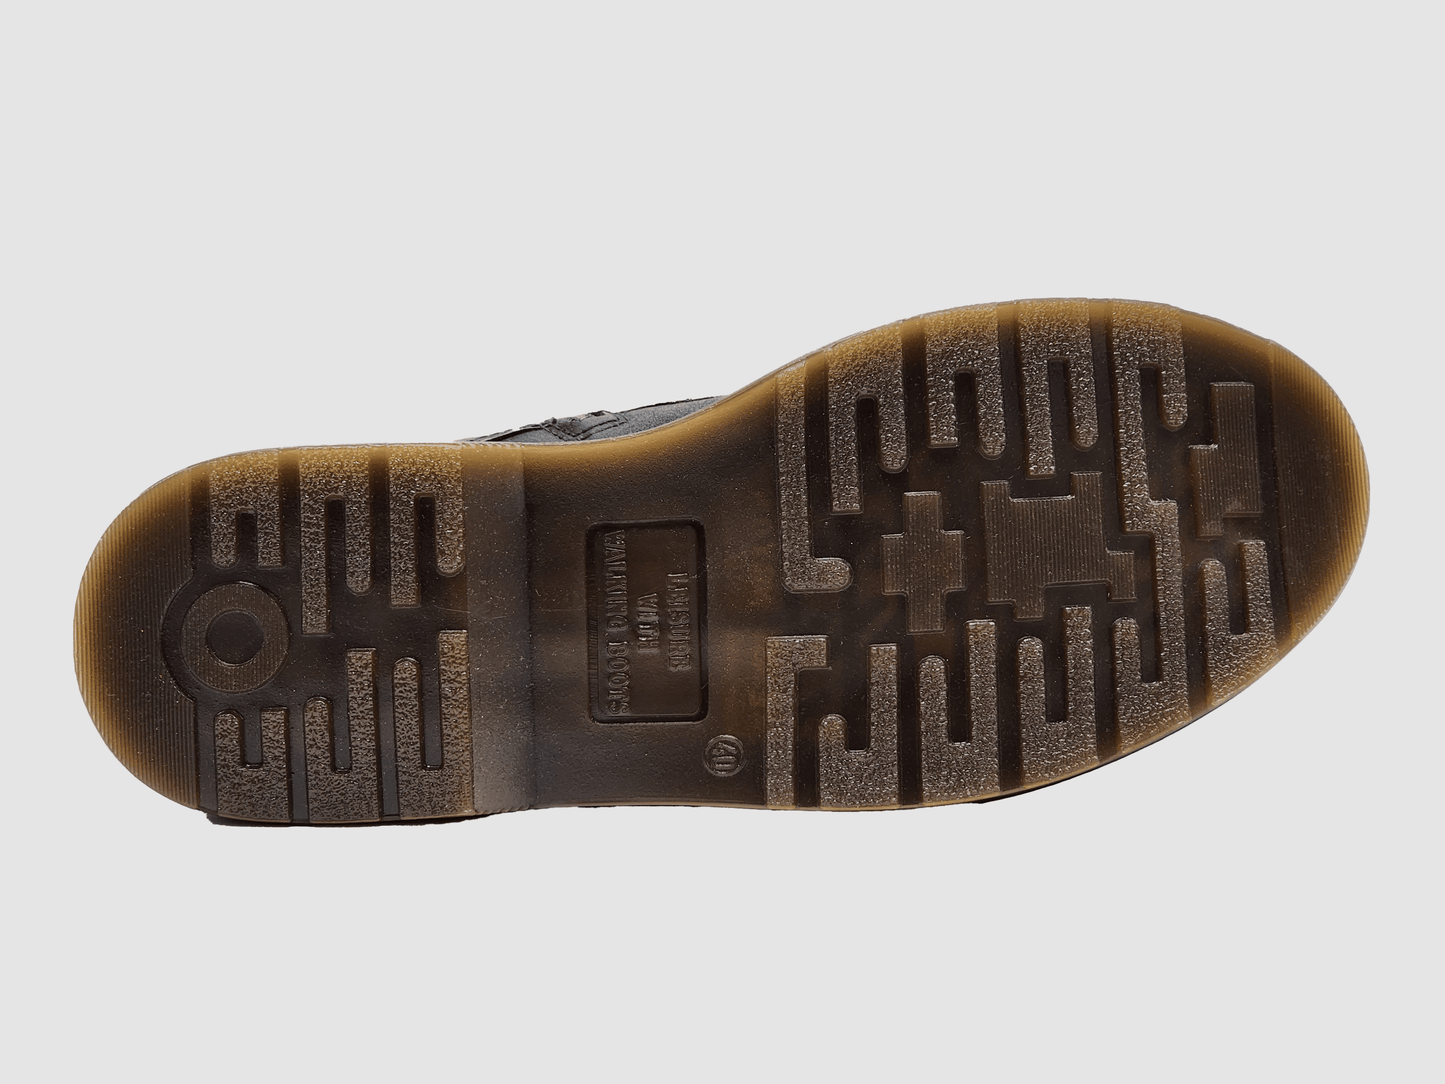 
                  
                    Men's Premium Black Zip-Up Leather Boots - Kacper Global Shoes 
                  
                